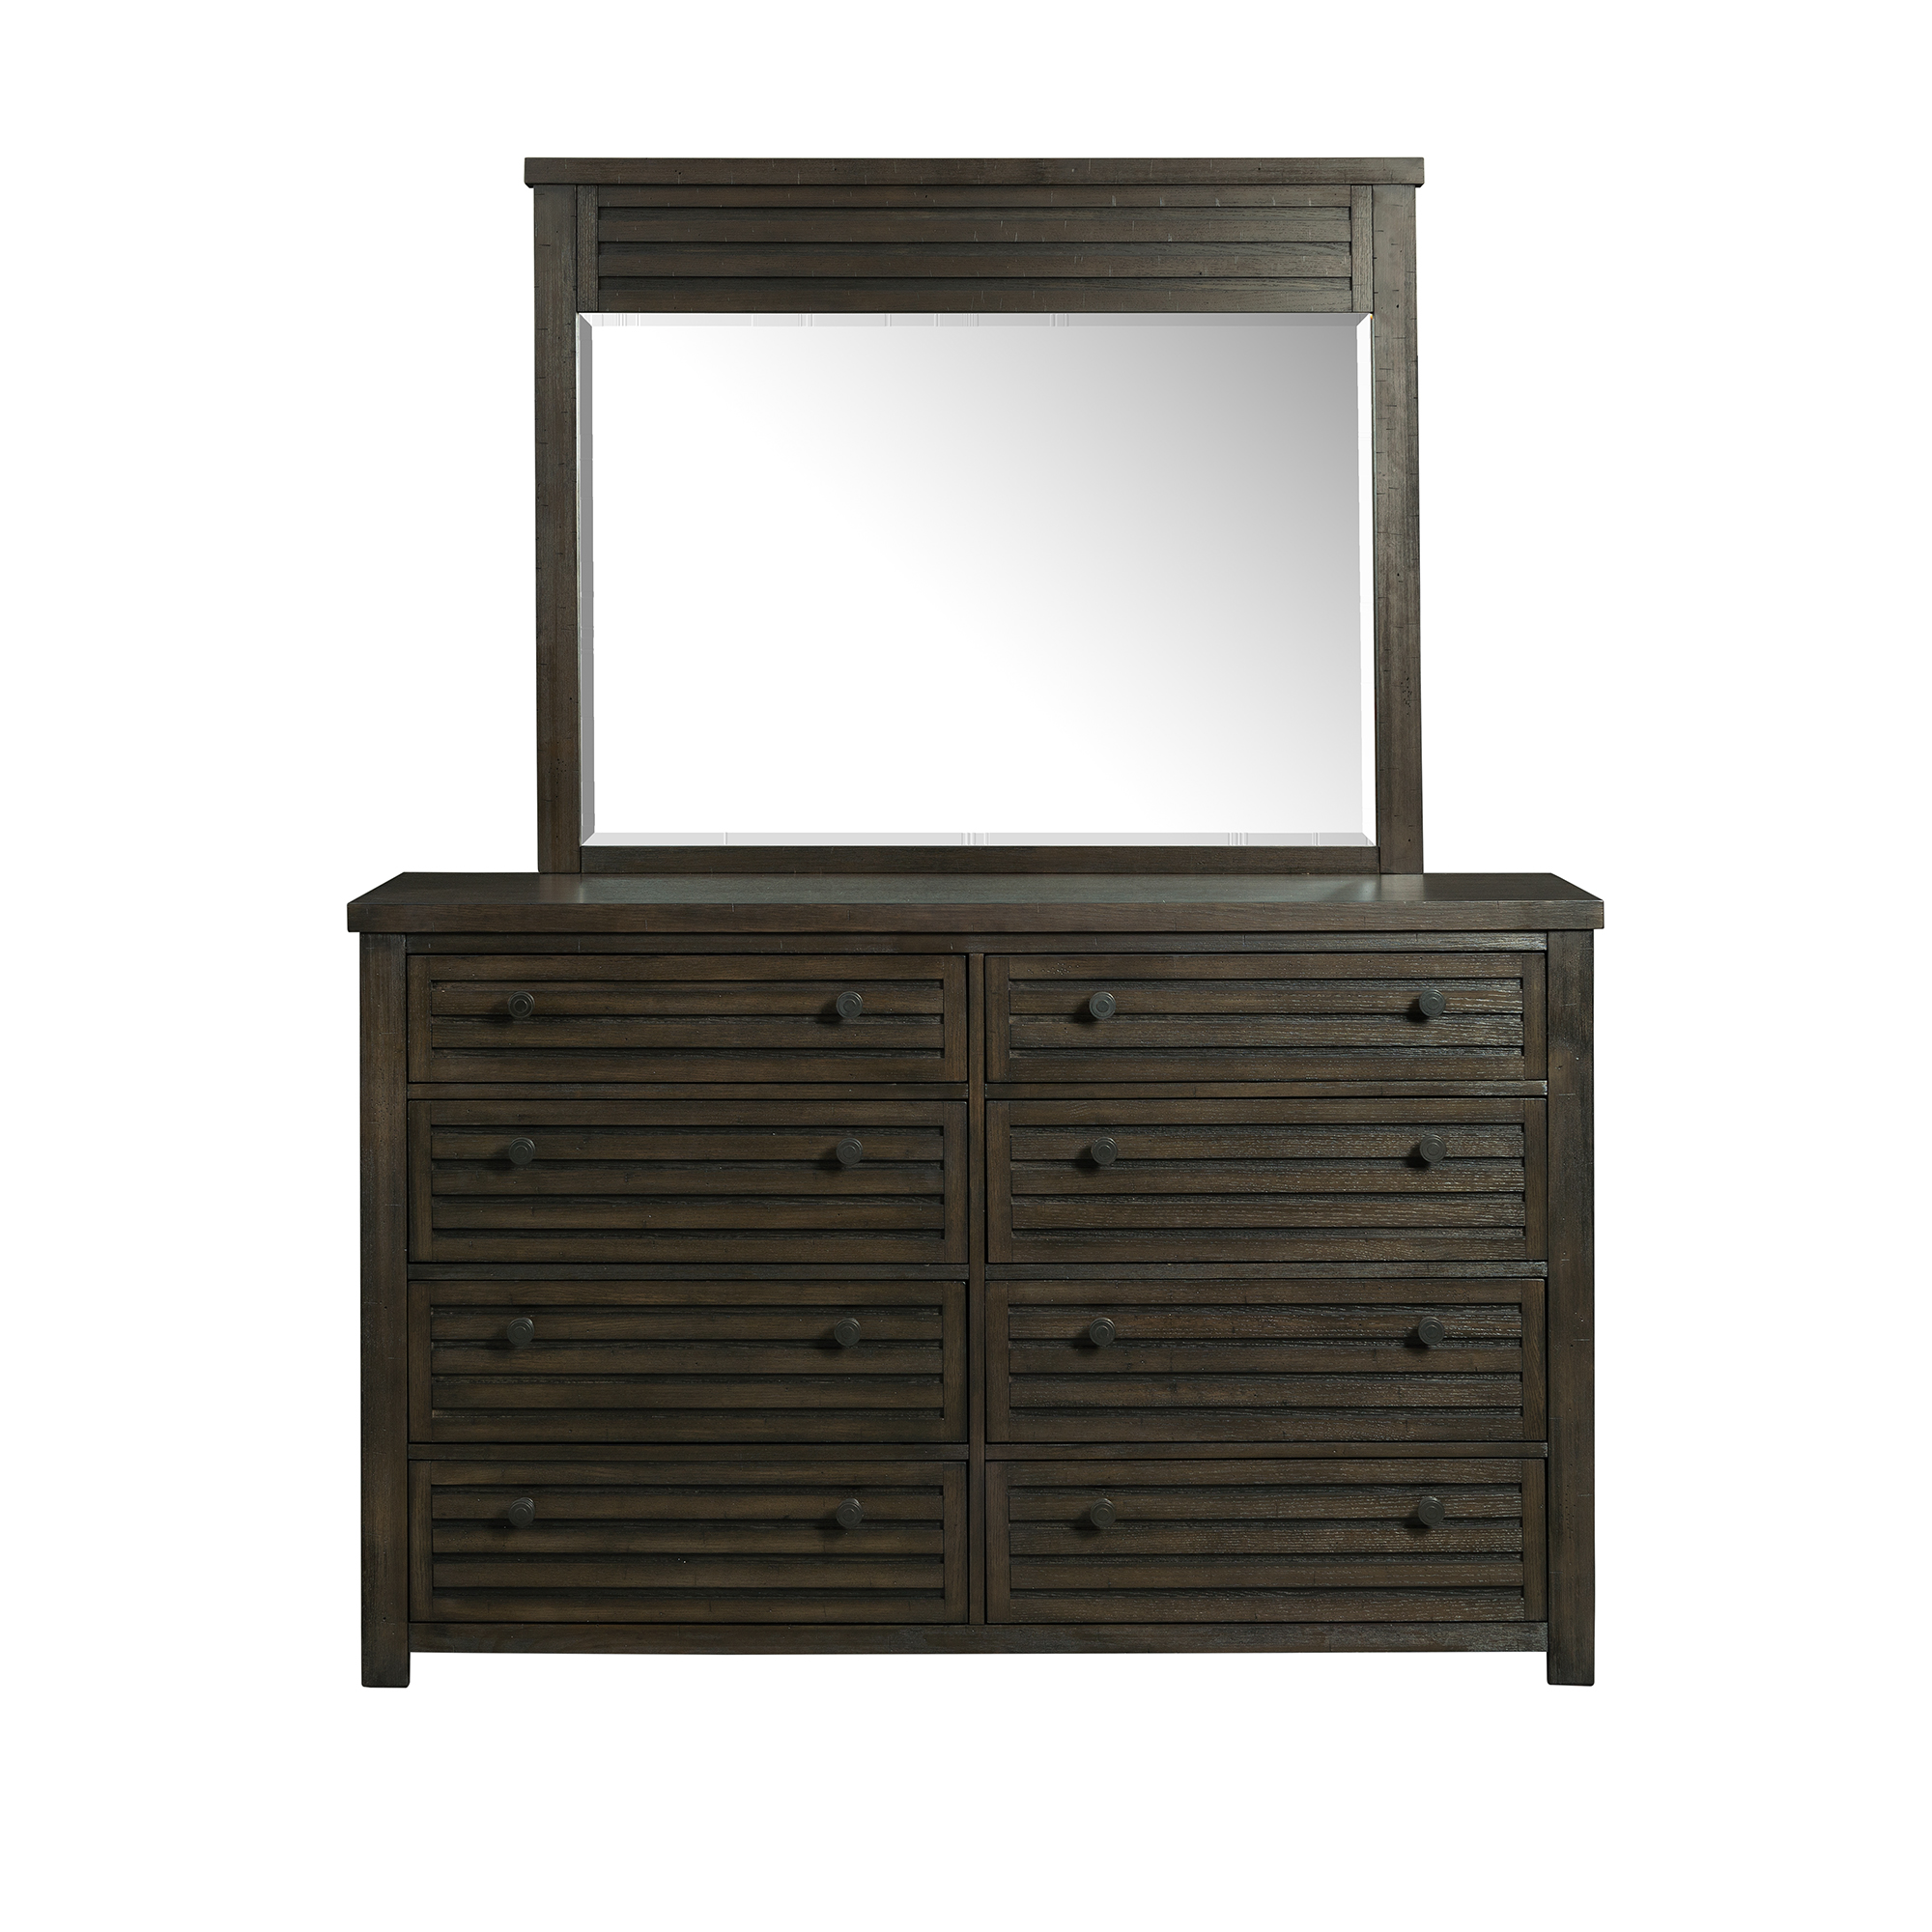 Picket House Furnishings Montego 8-Drawer Dresser And Mirror Set SB600DRMR - image 2 of 12